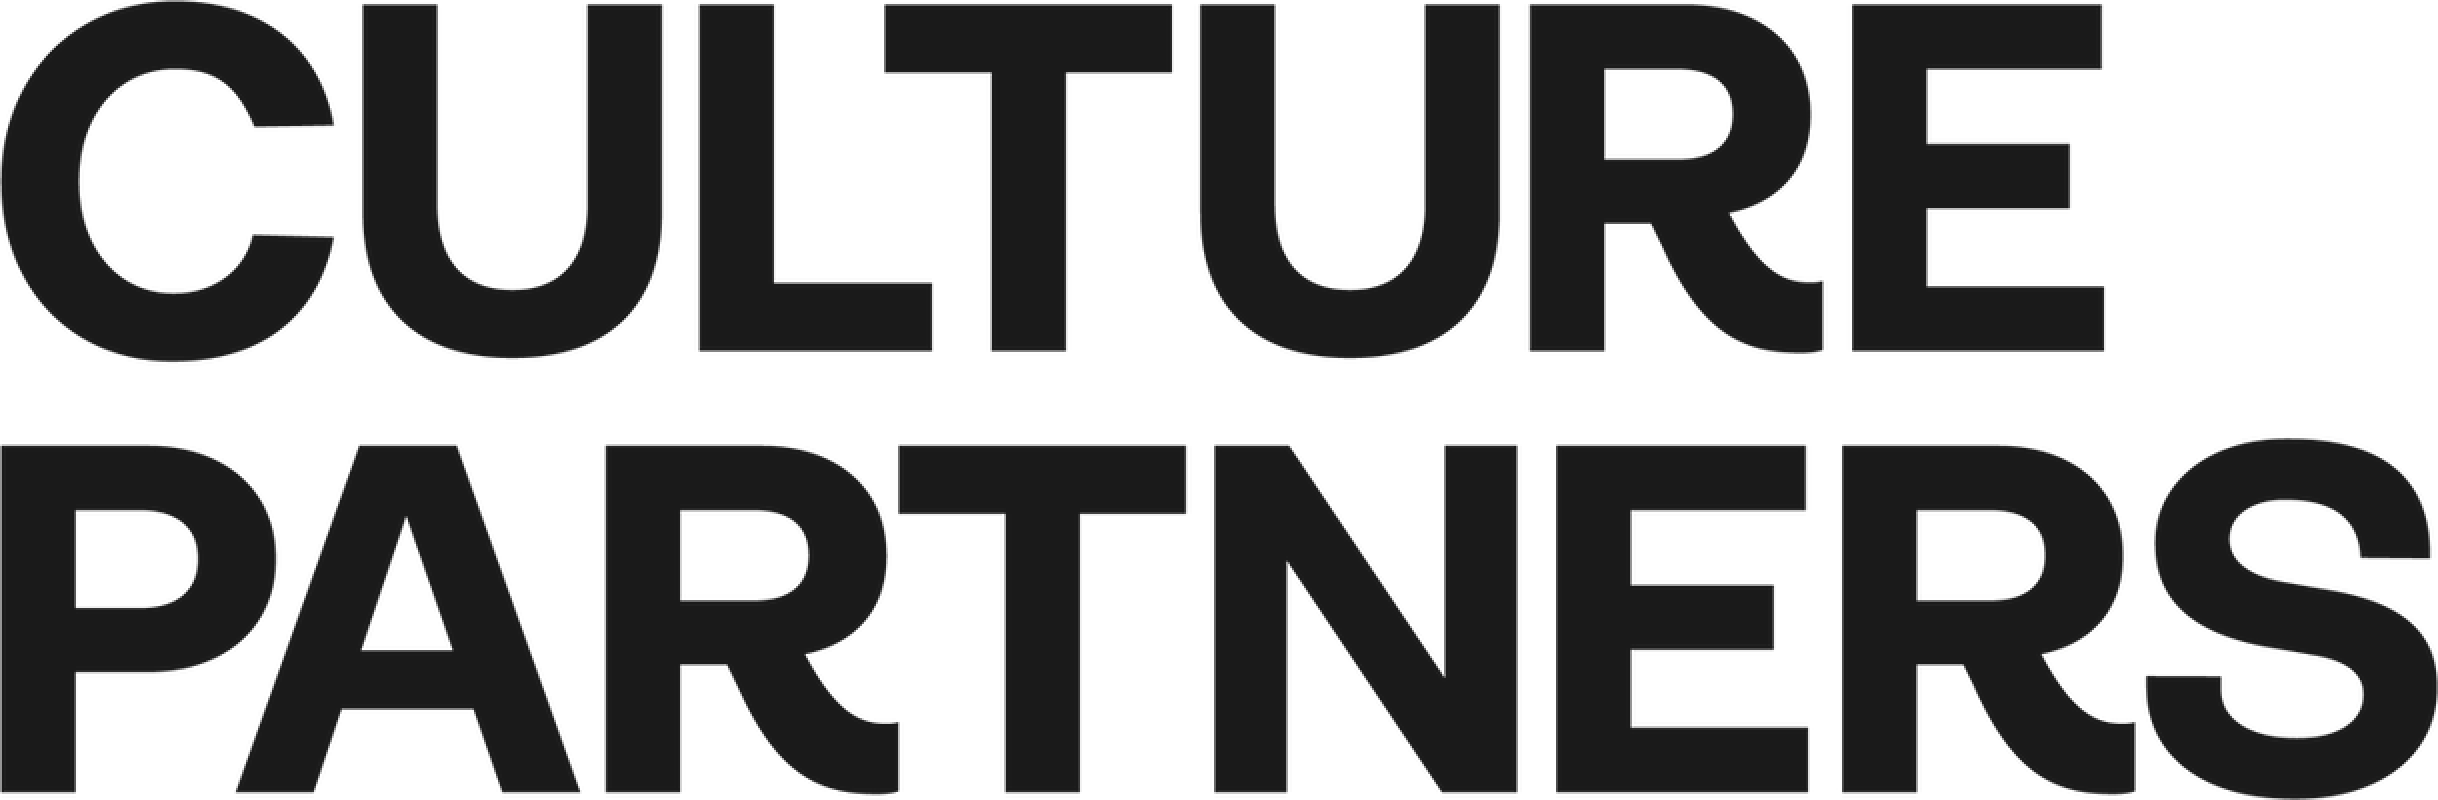 culture partners logo